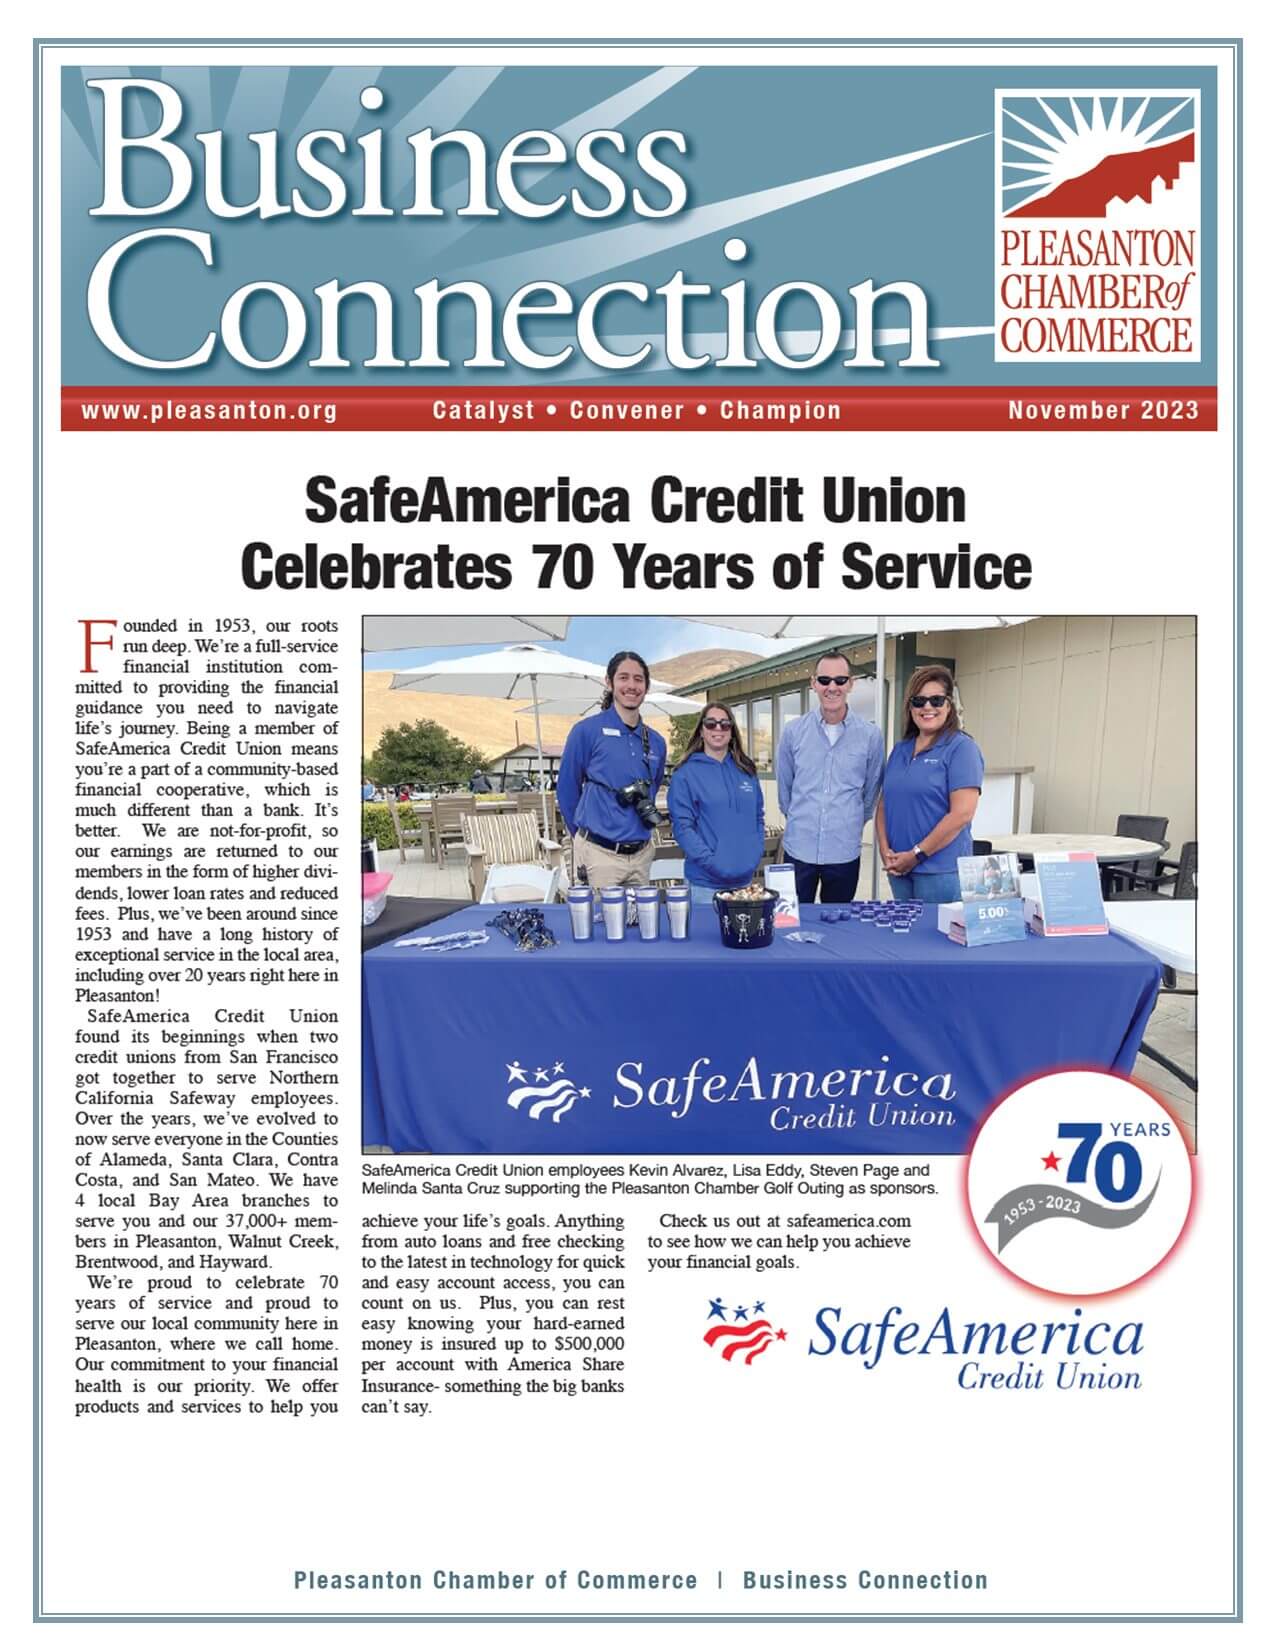 SafeAmerica-Credit-Union